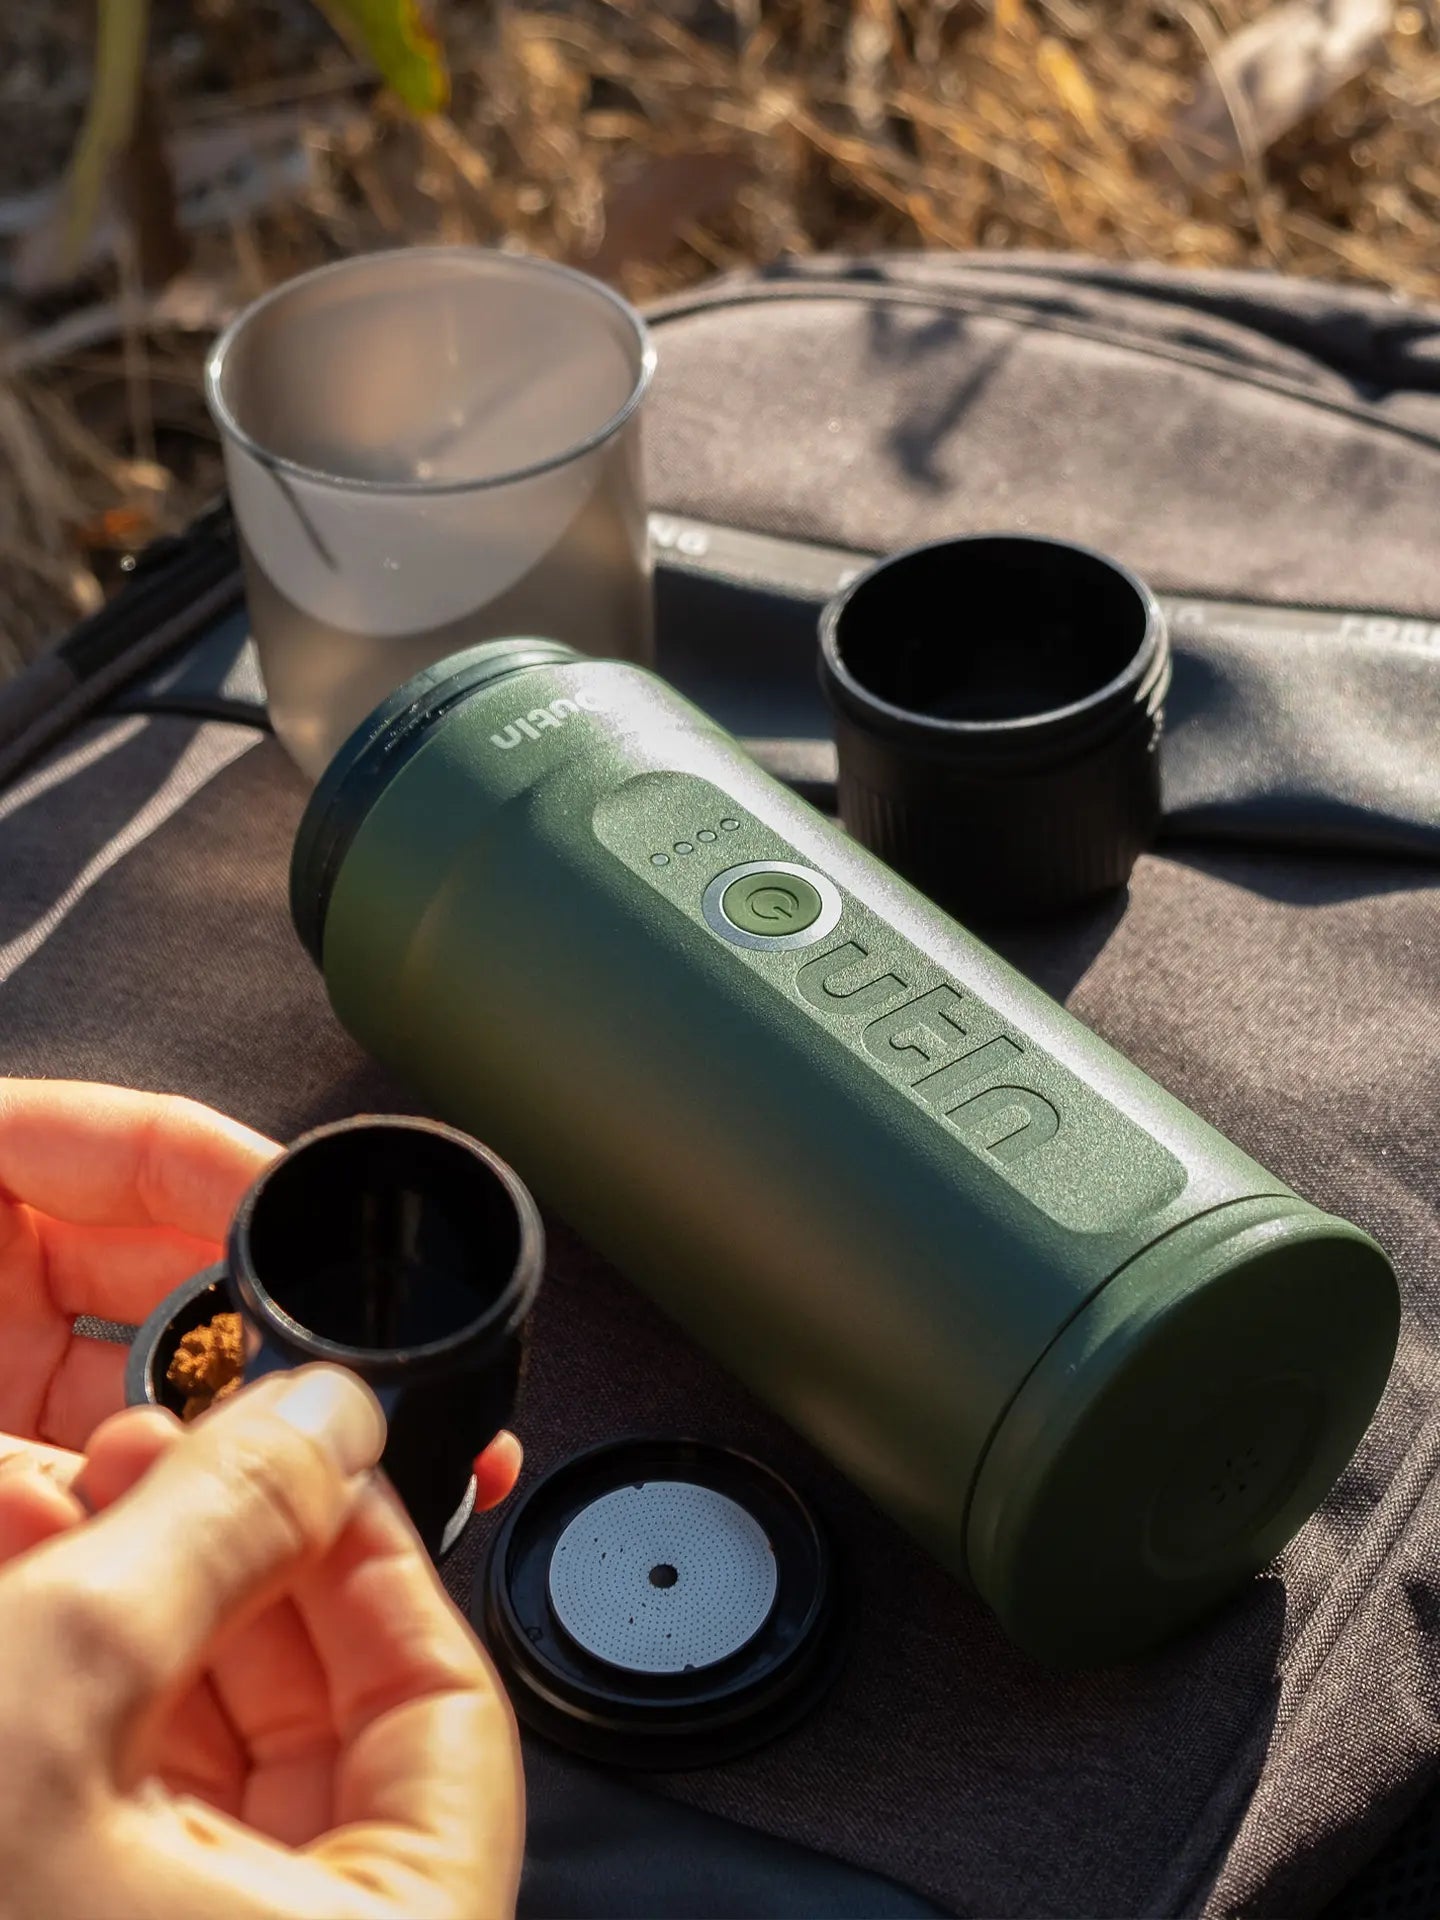 Outin Nano | Portable Espresso Machine Adapters Kit | Travel Coffee Machine Companion